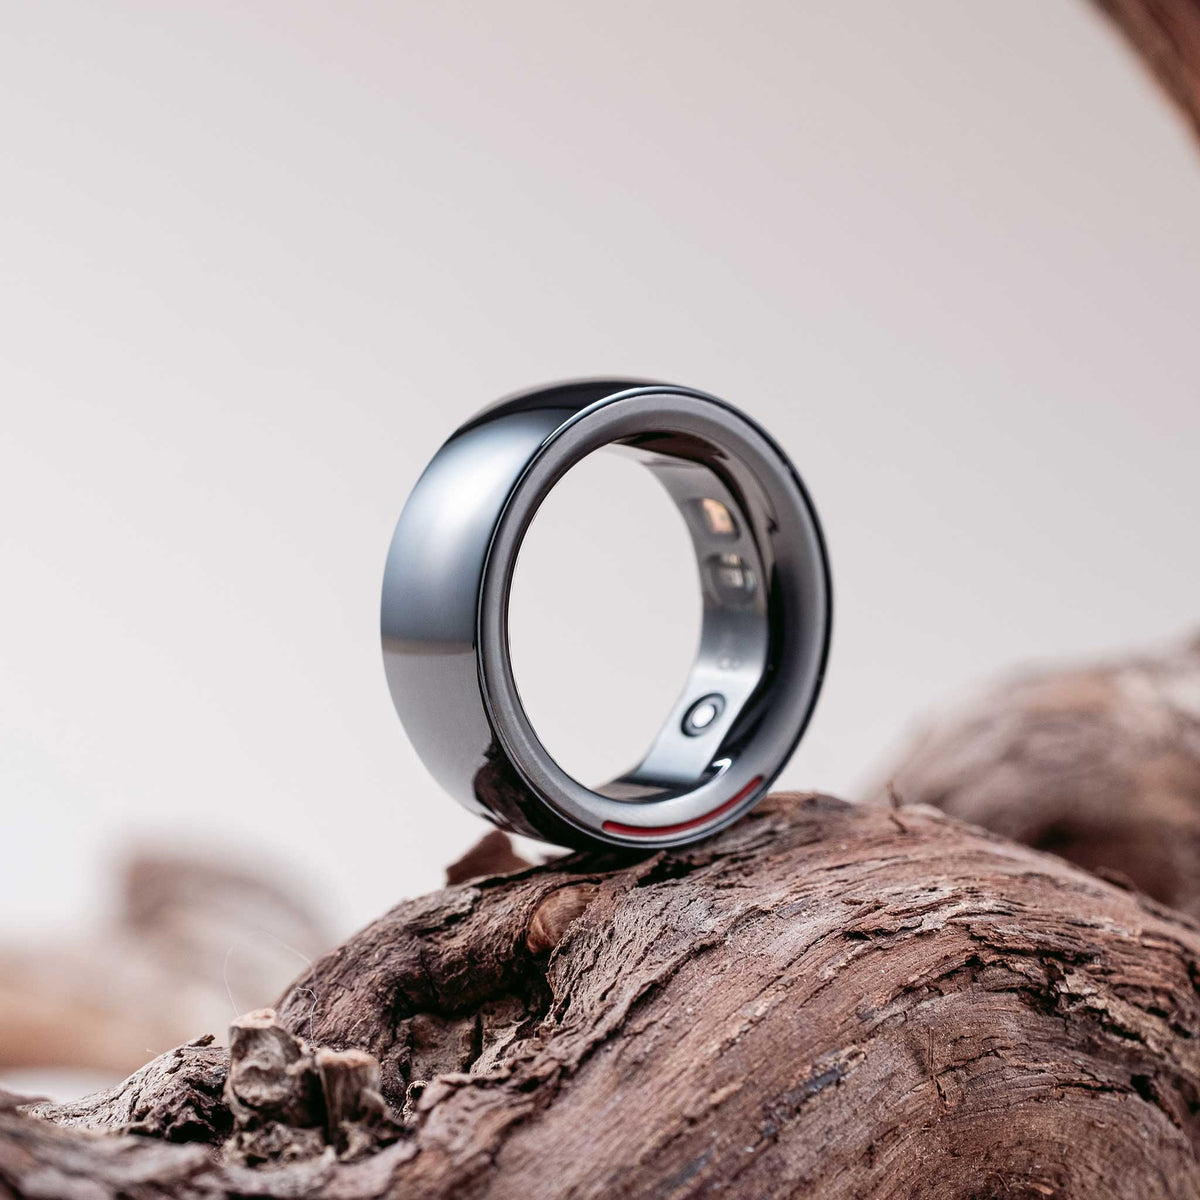 Odo Smart Ring 3, Black - 199,00 EUR - Odo Ring